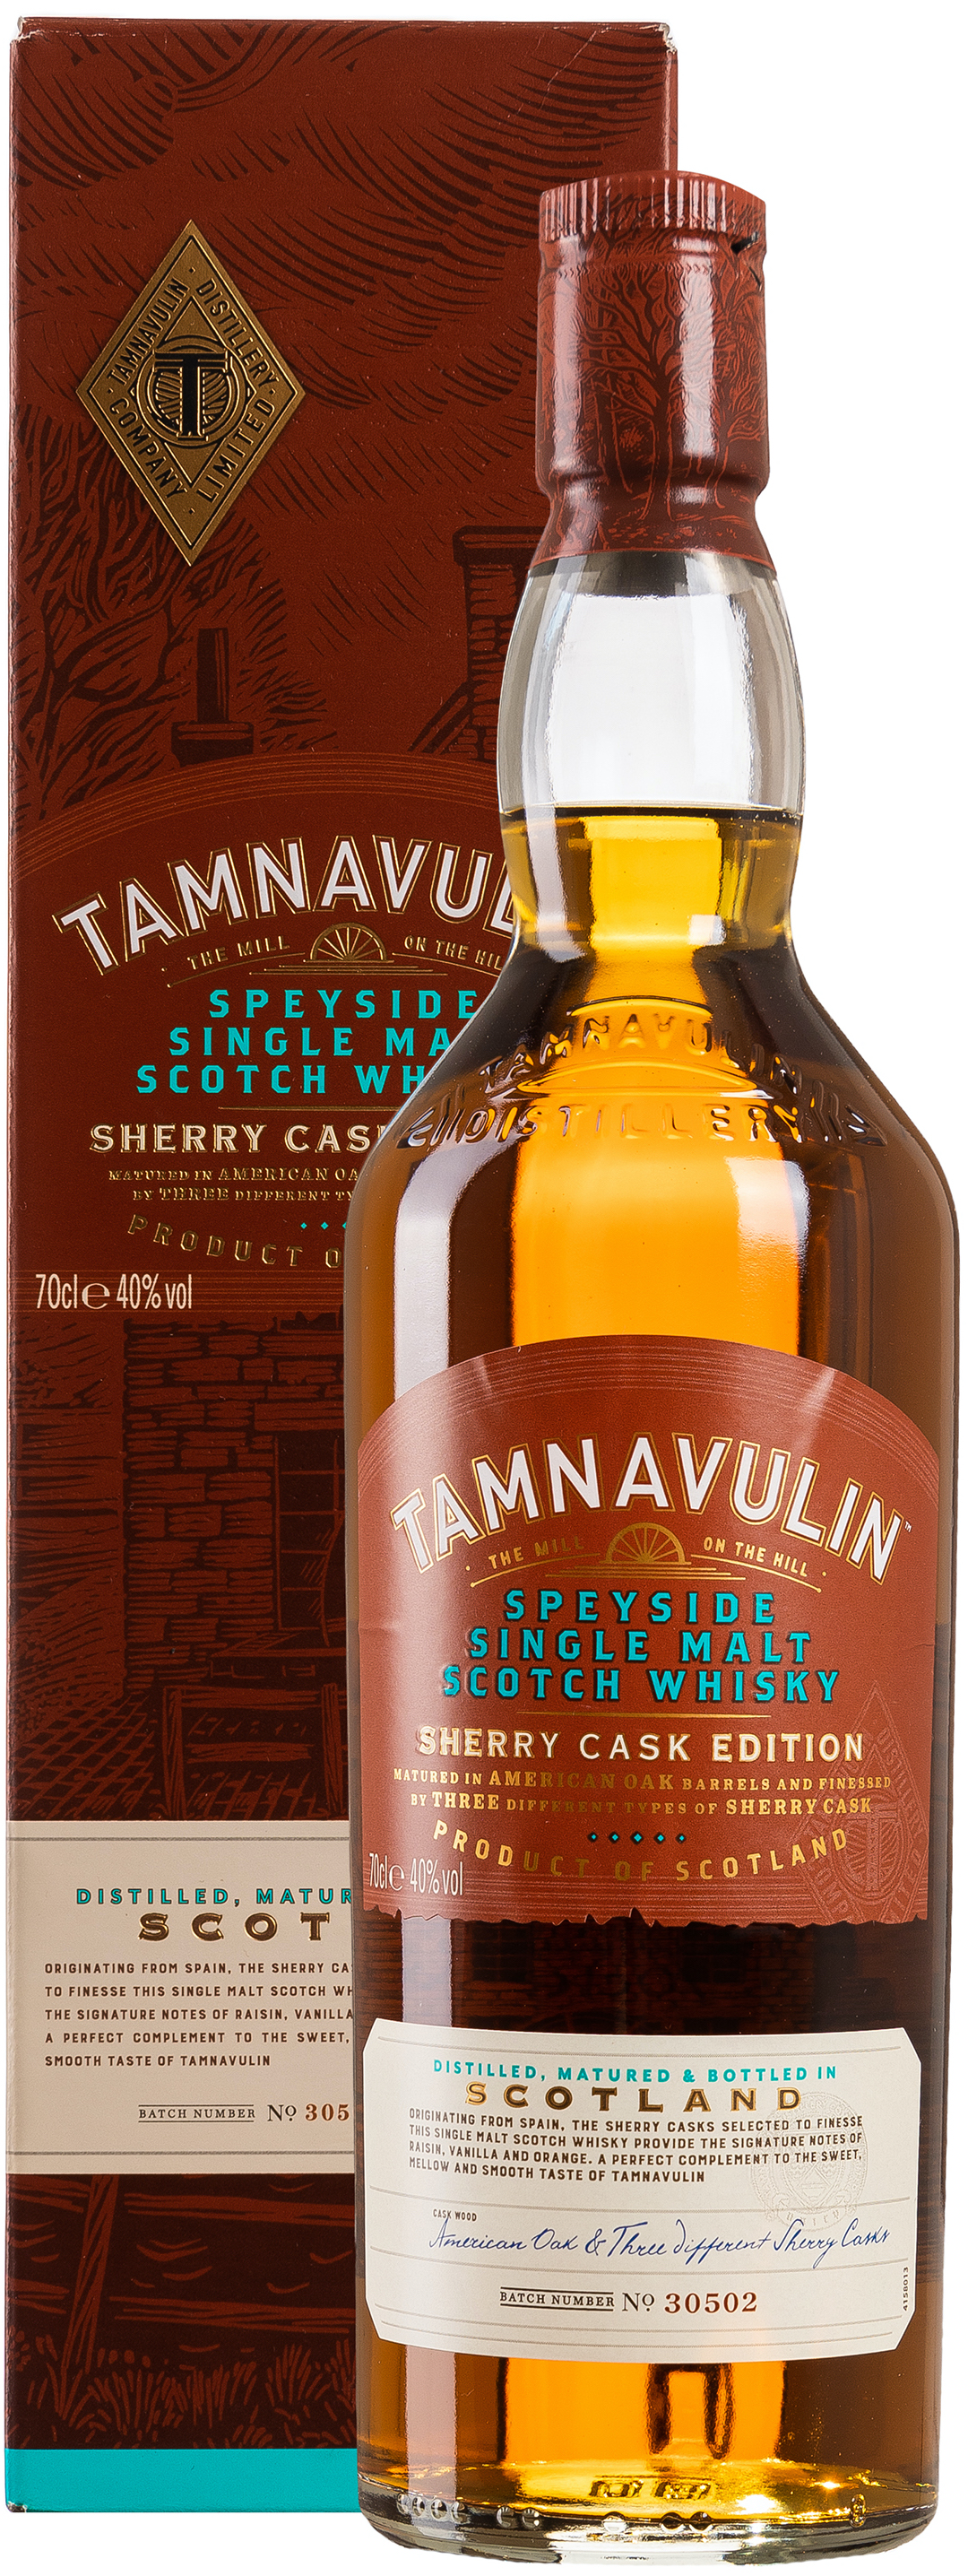 Tamnavulin Seayside Single Malt Scotch Whiskey Sherry Cask Edition 40% vol. 0,7L